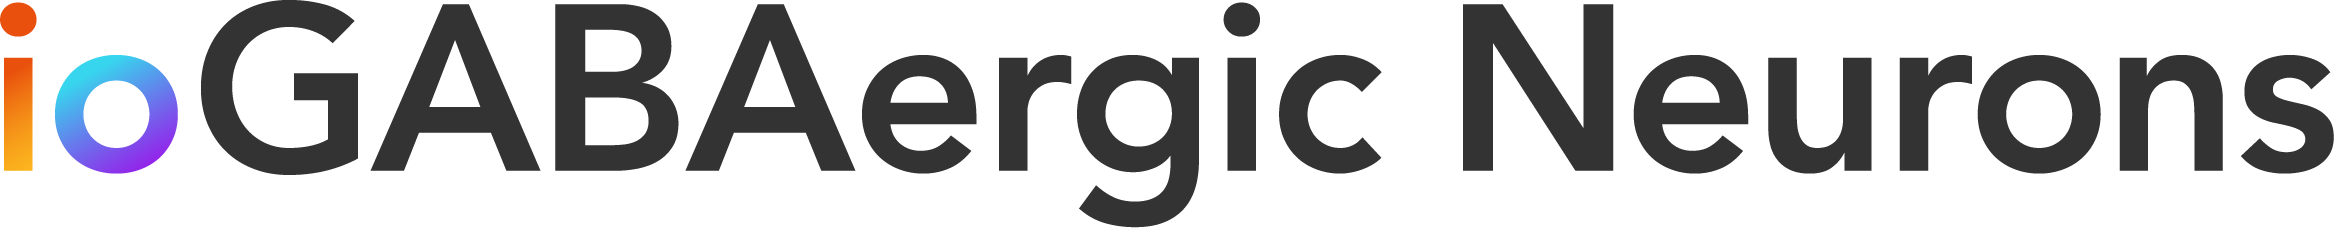 ioGABAergic_Neurons_logo-1_line-screen-grey_gradient (1)